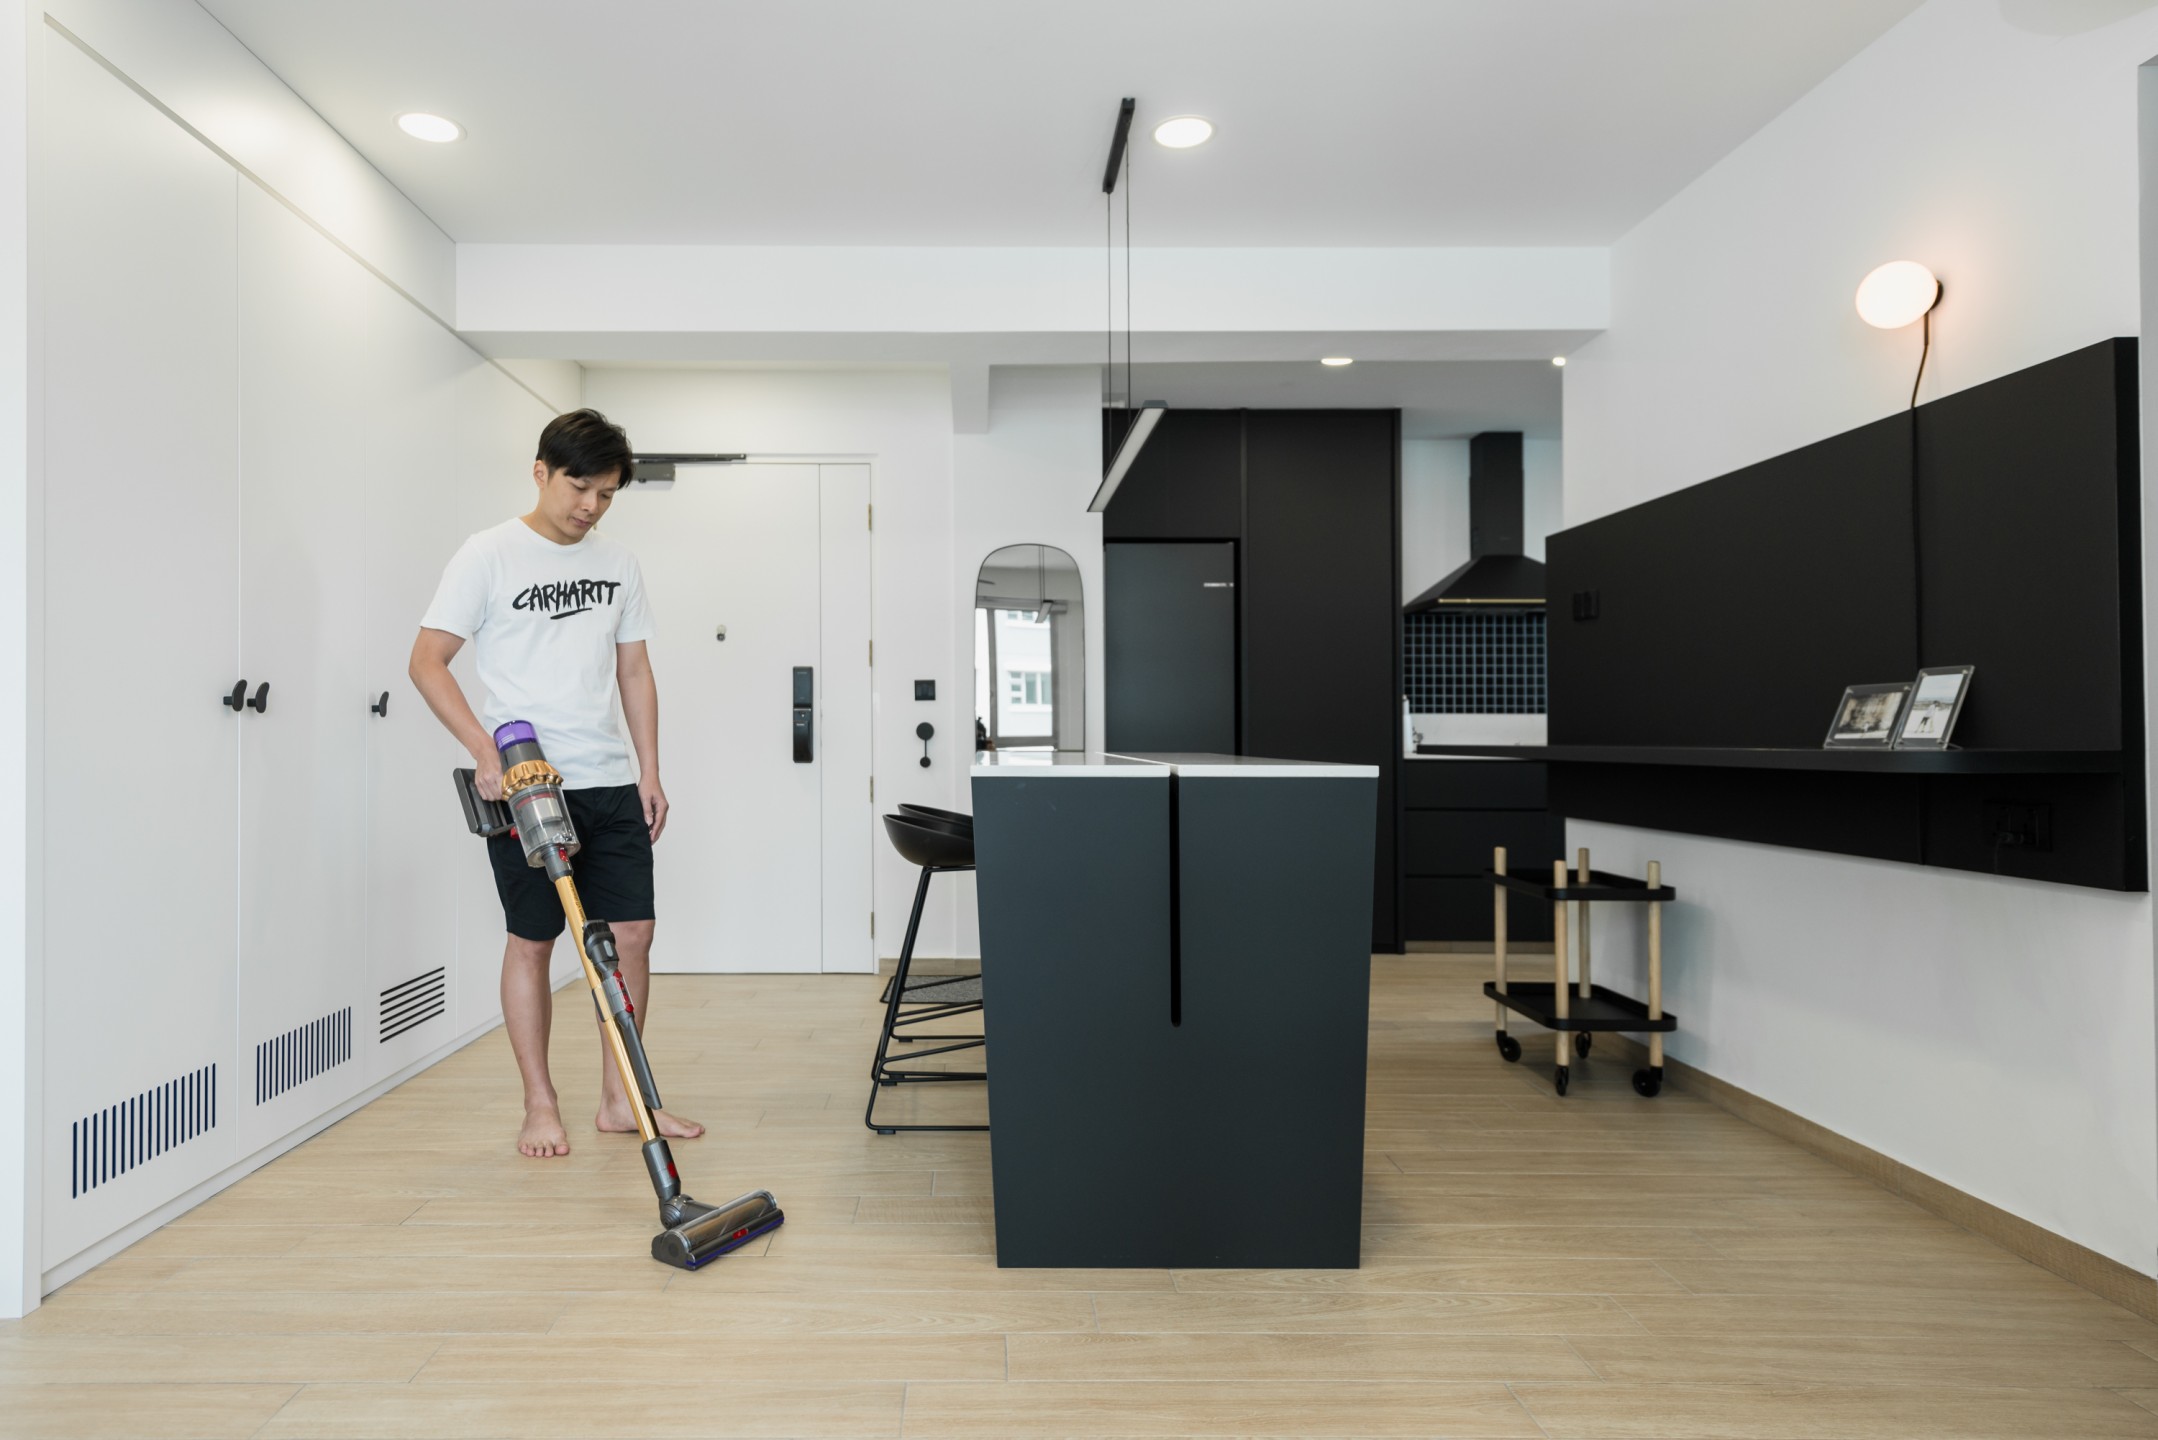 squarerooms-dyson-home-appliance-lifestyle-monochromatic-sleek-man-cleaning-vacuum-kitchen